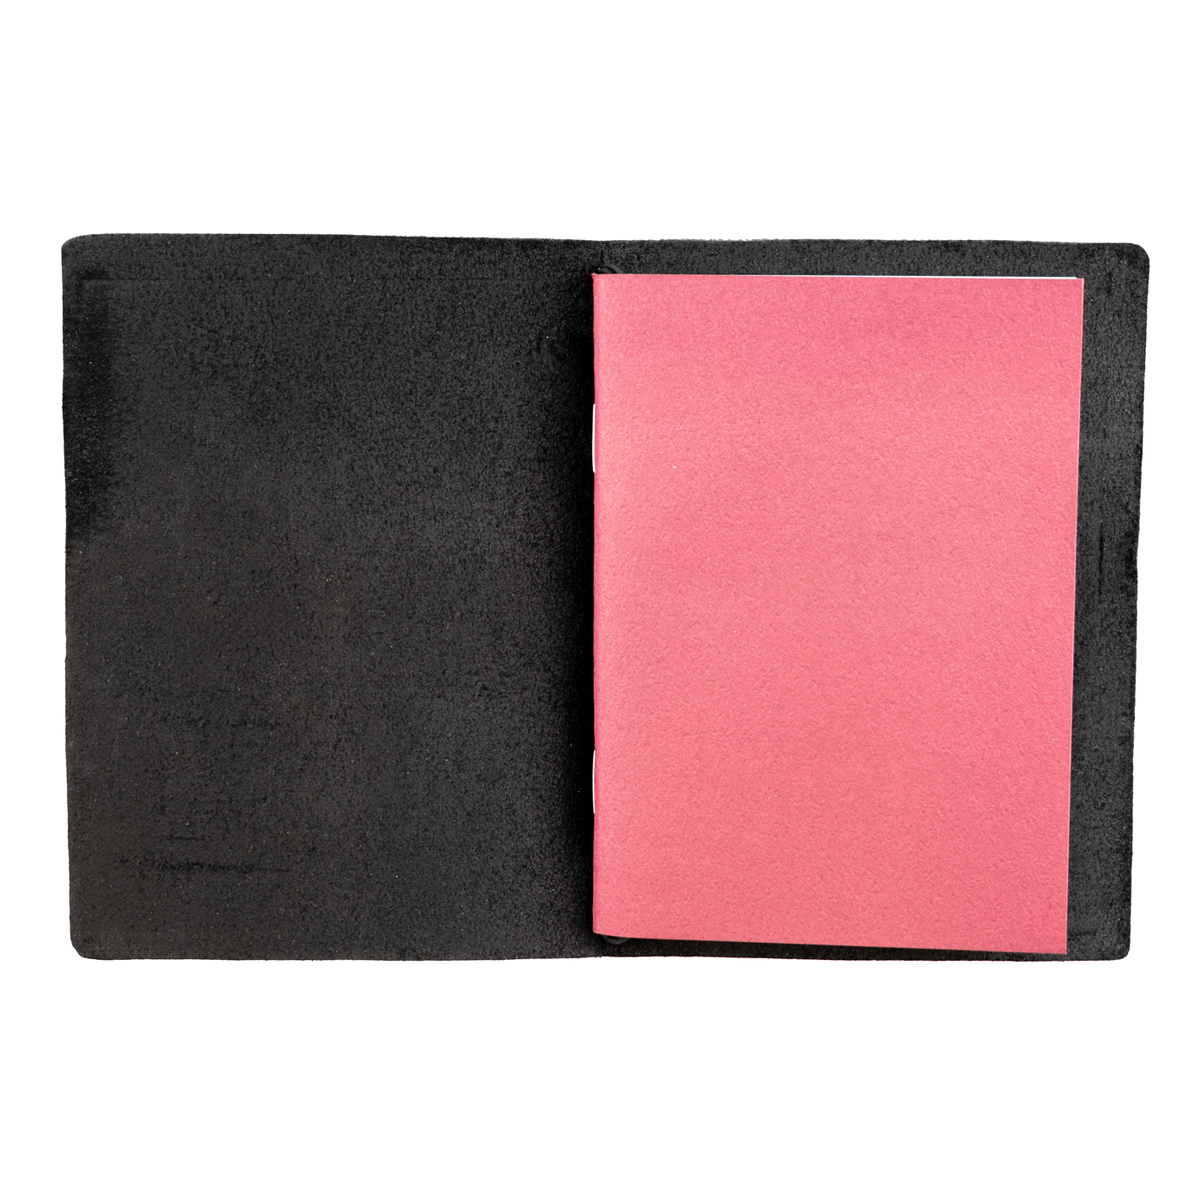 Traveler's Company Passport Sized Leather Notebook Kit - Black